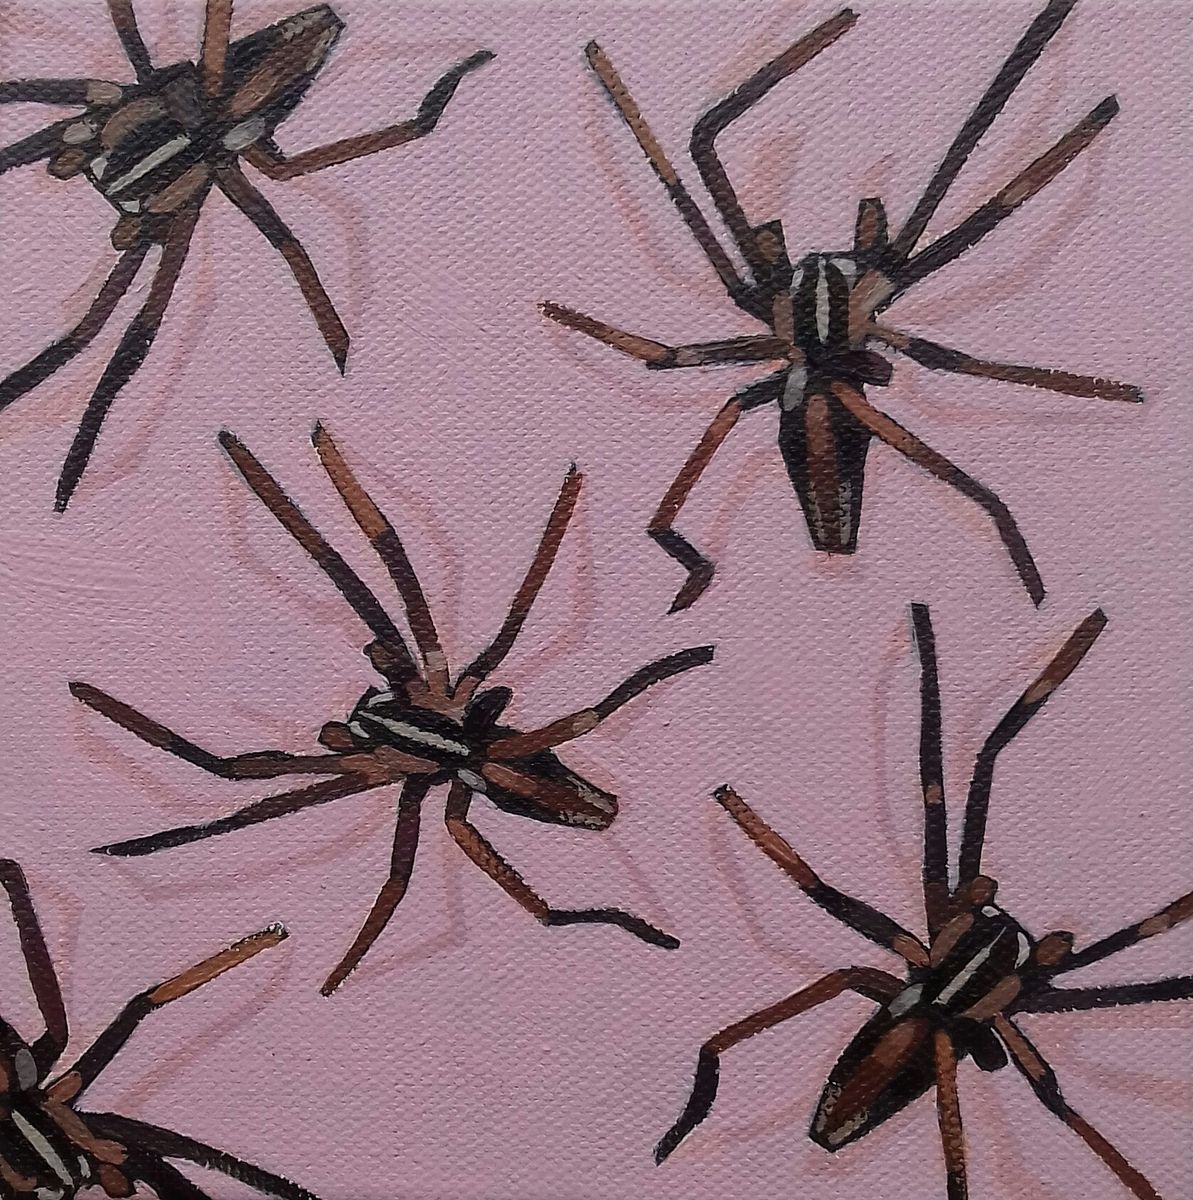 Spiders by Matthew Stutely